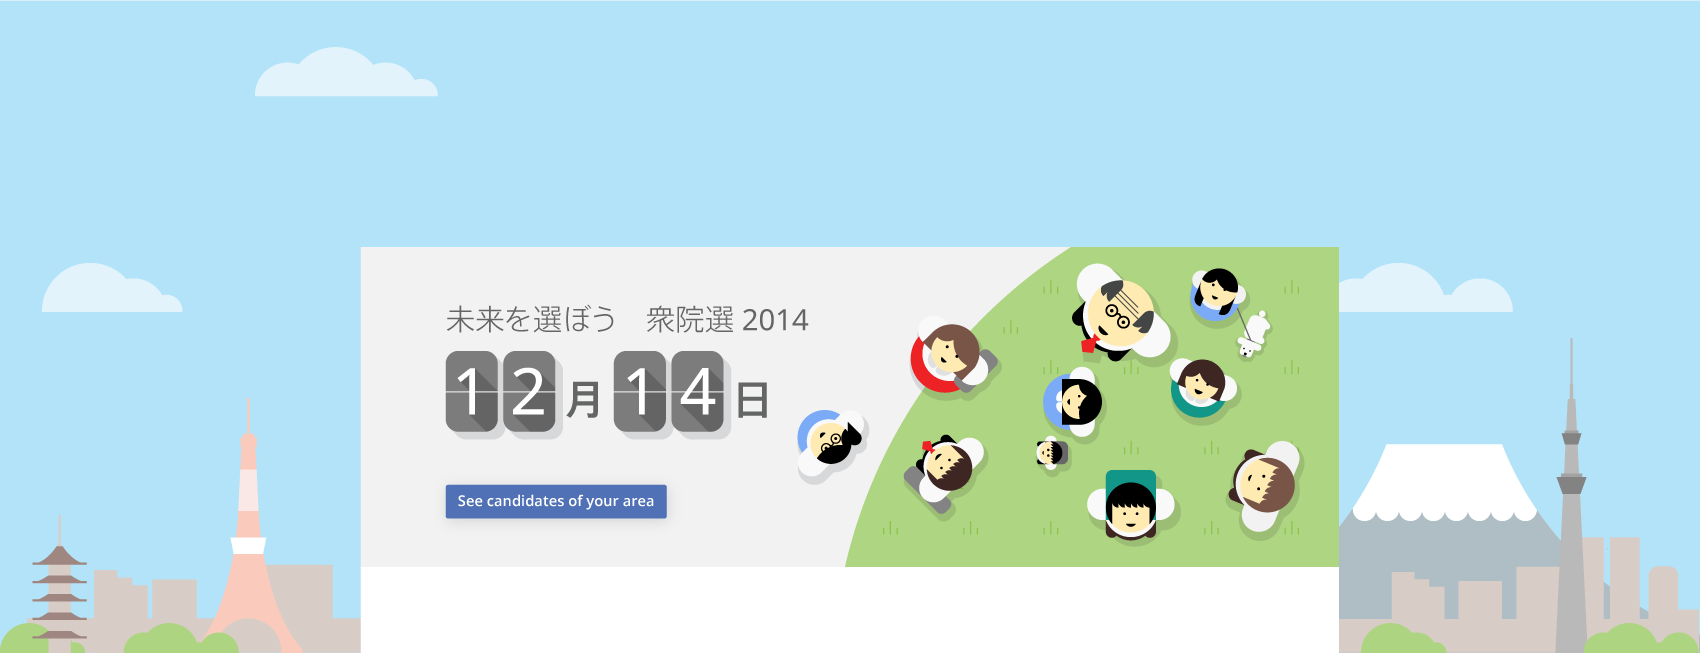 Google Japan 2014 Election Illustrations